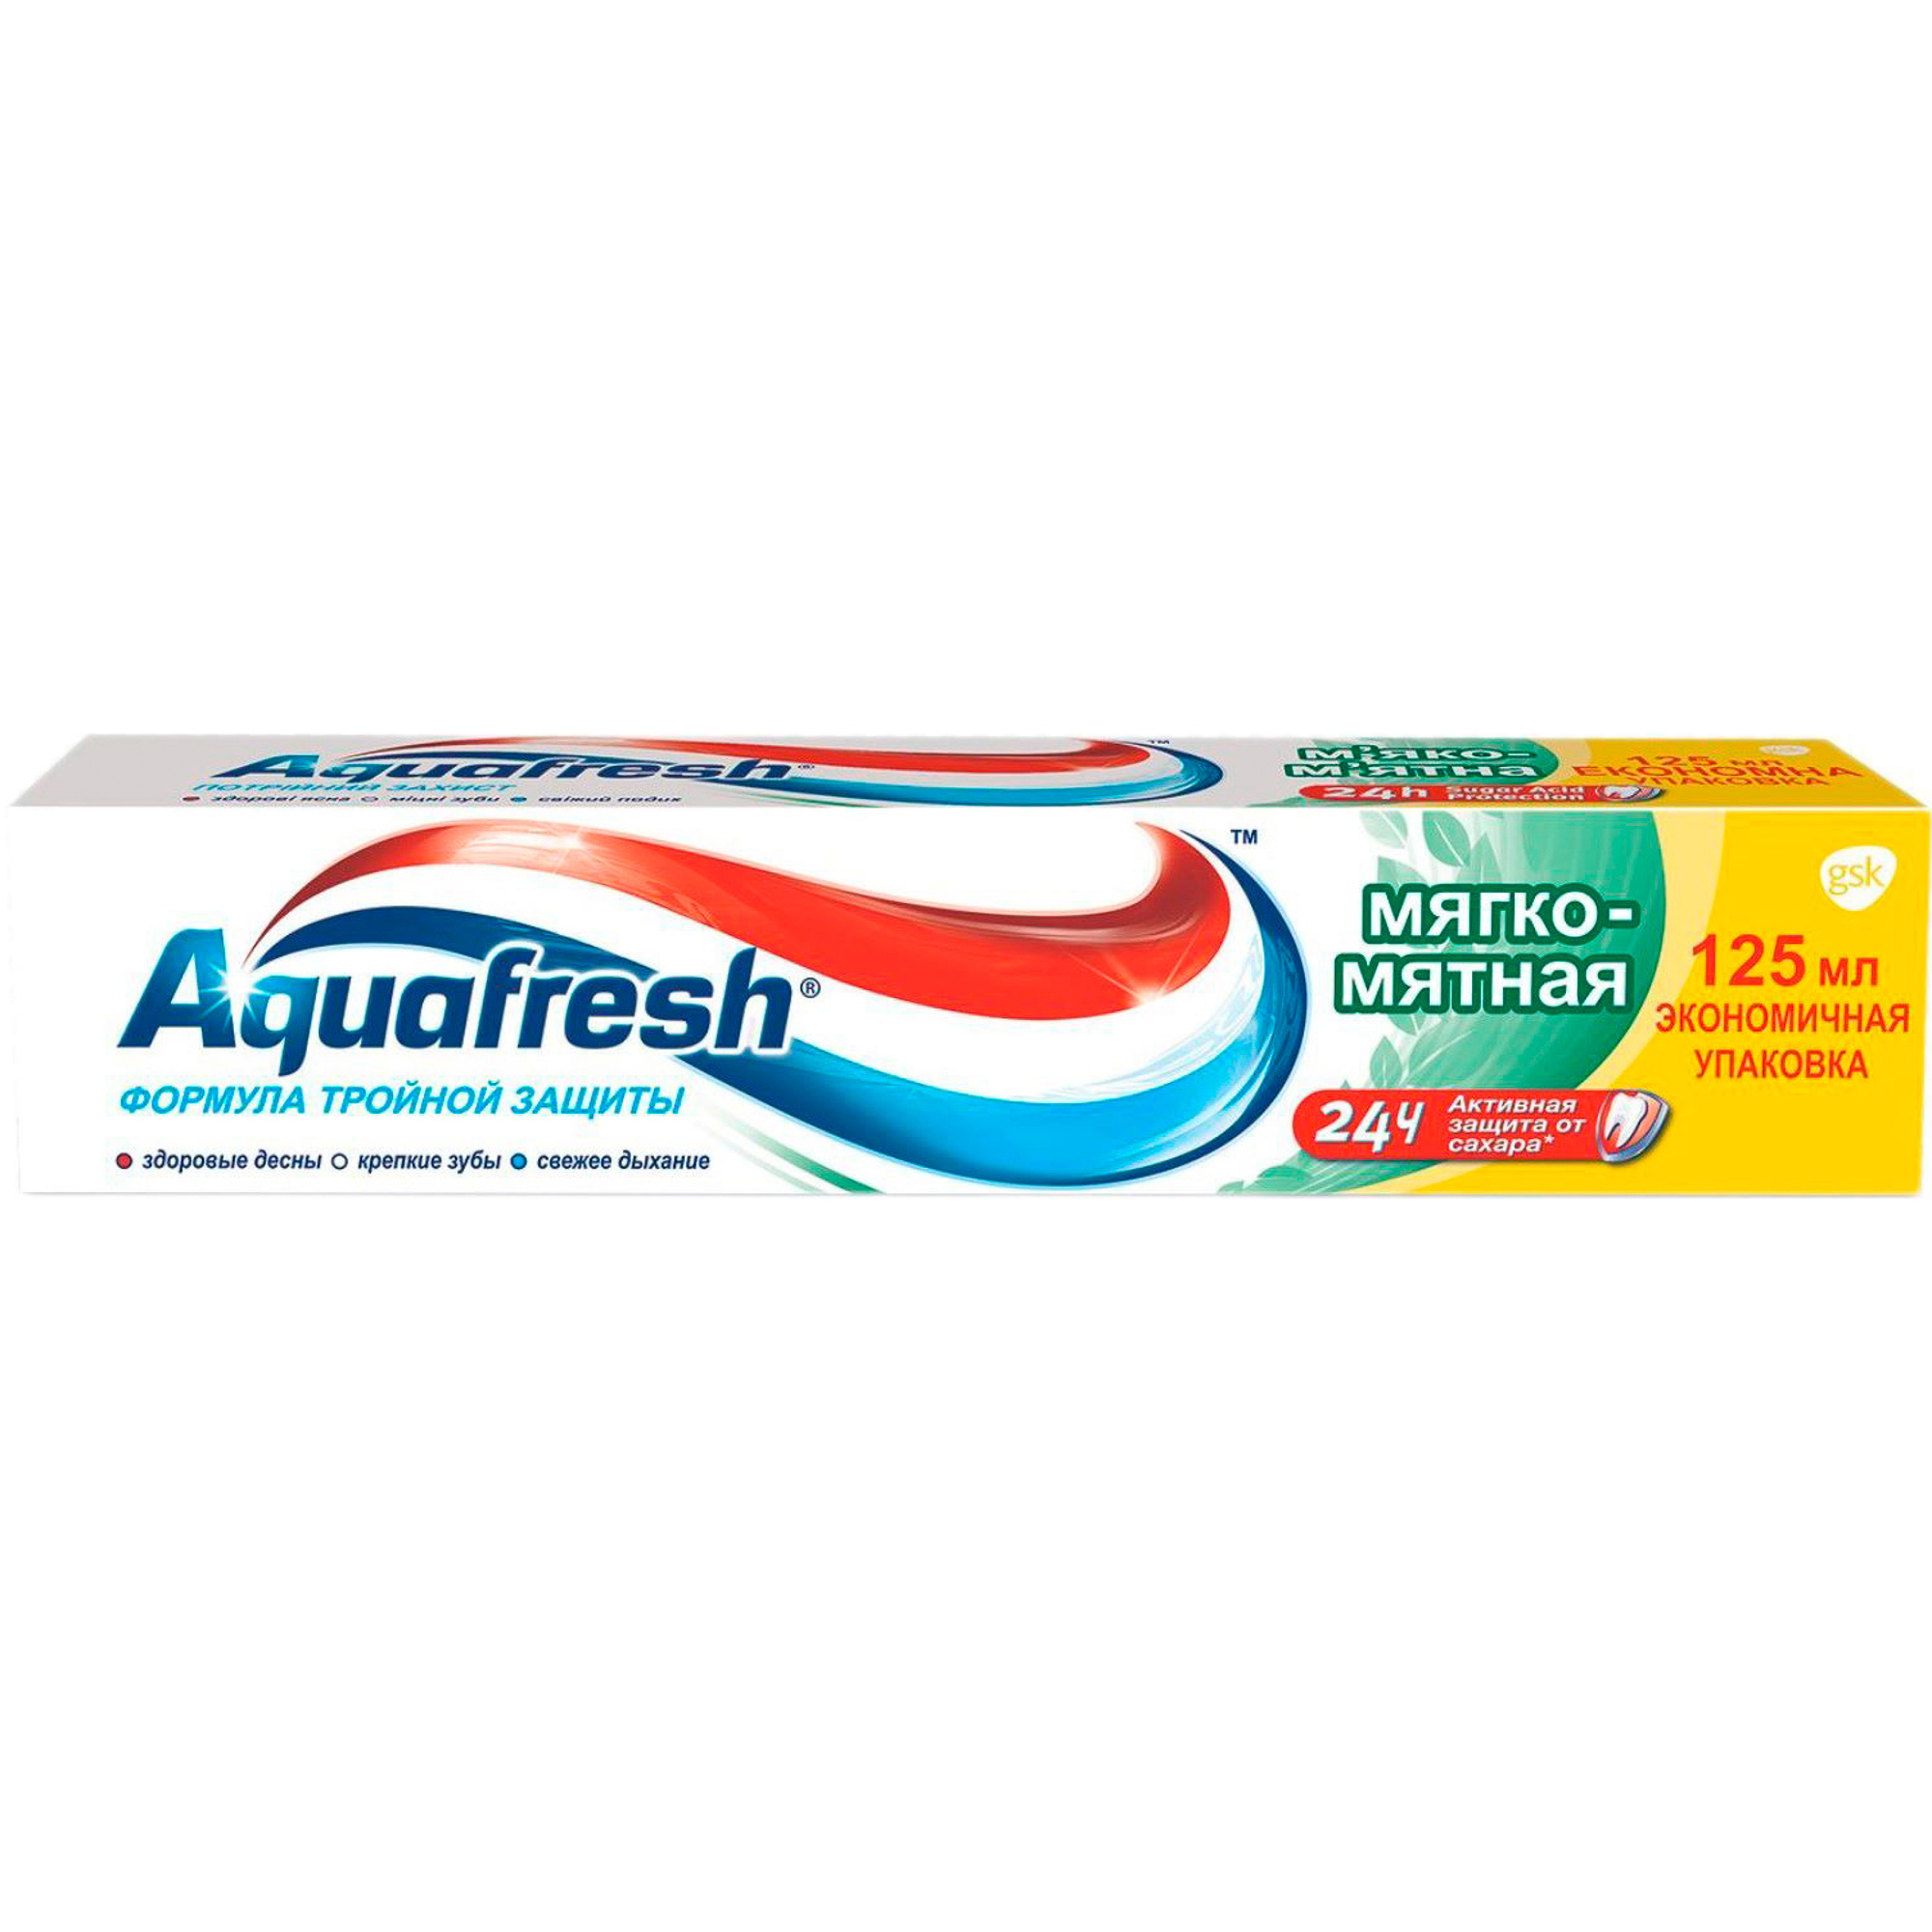 Зубная паста Aquafresh Мягко-мятная 125 мл